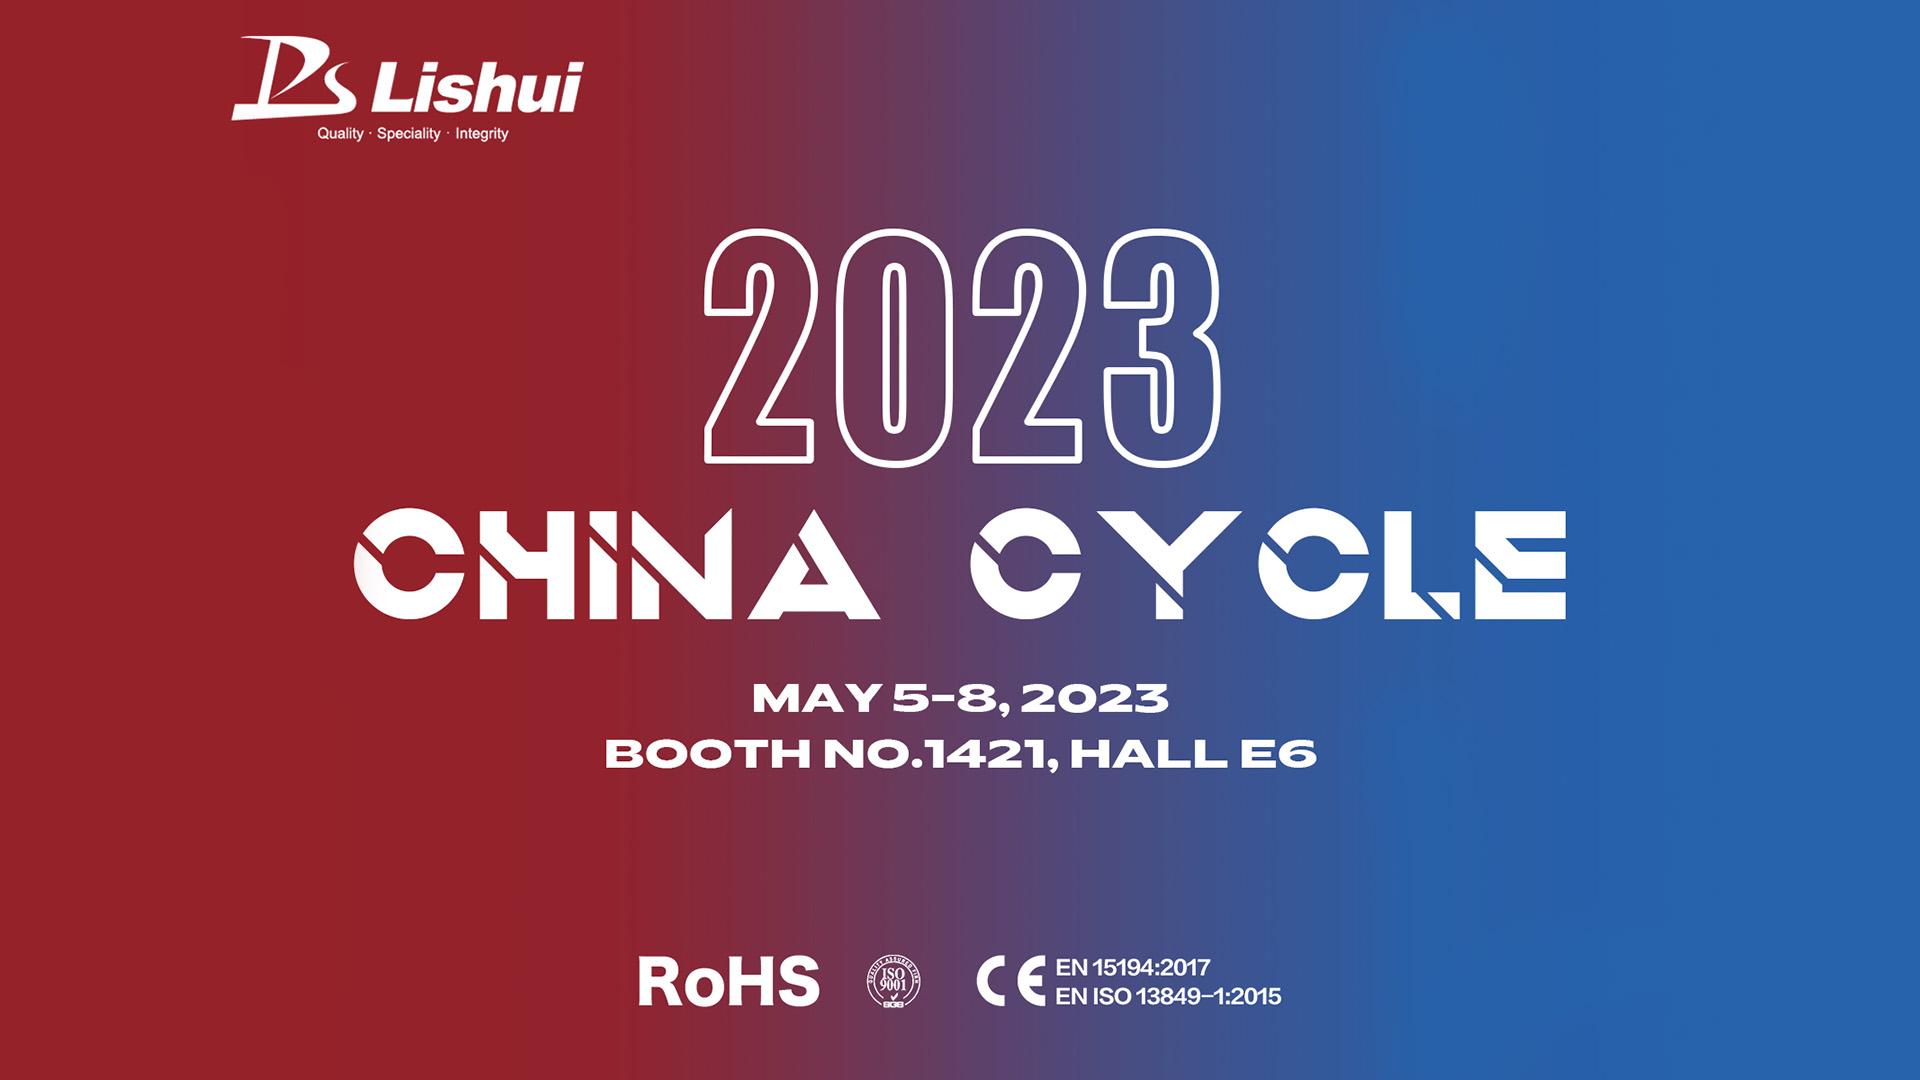 Lishui China Cycle